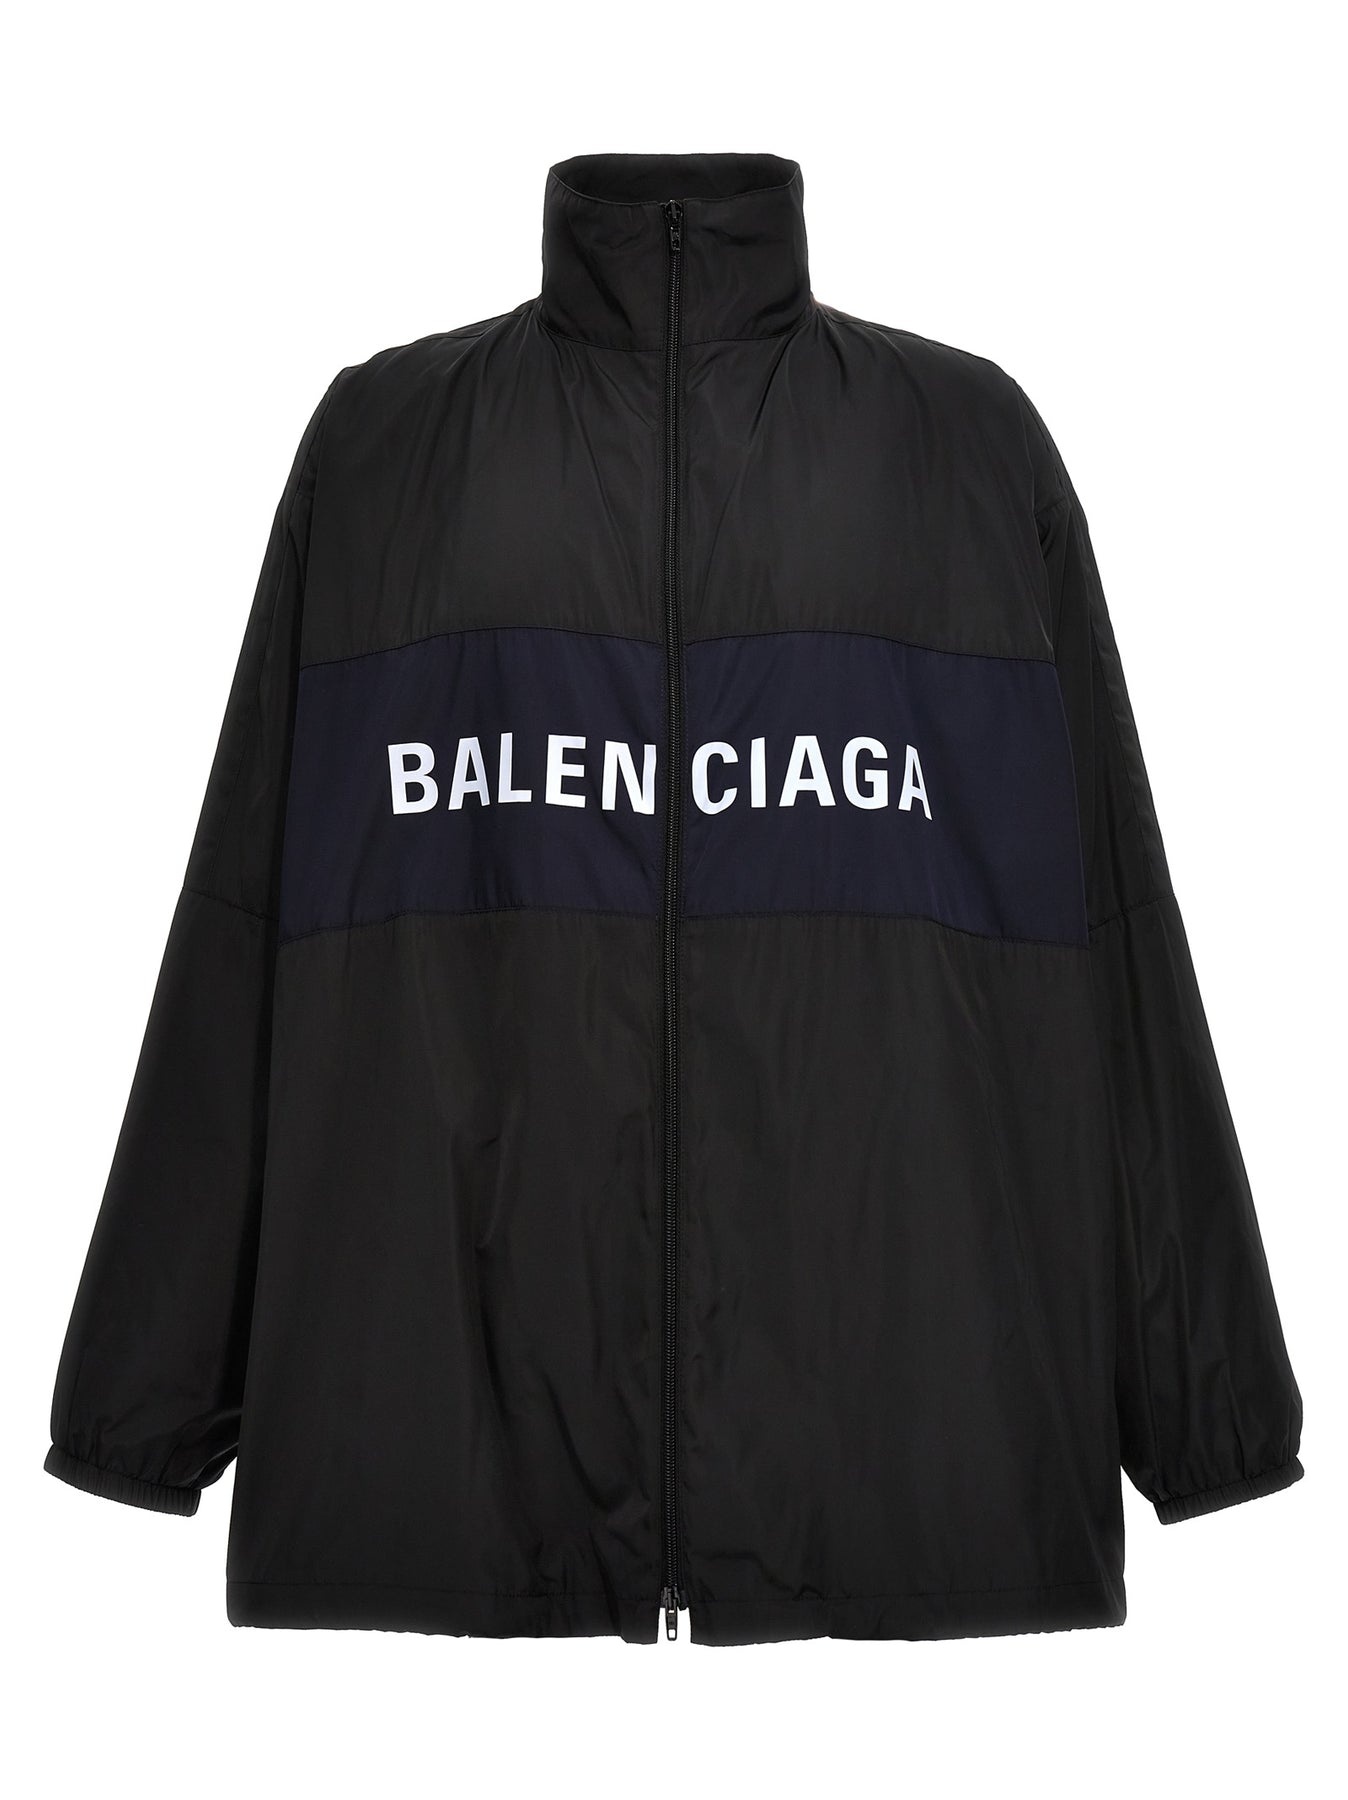 Balenciaga Casual Jackets, Parka White/Black - 1